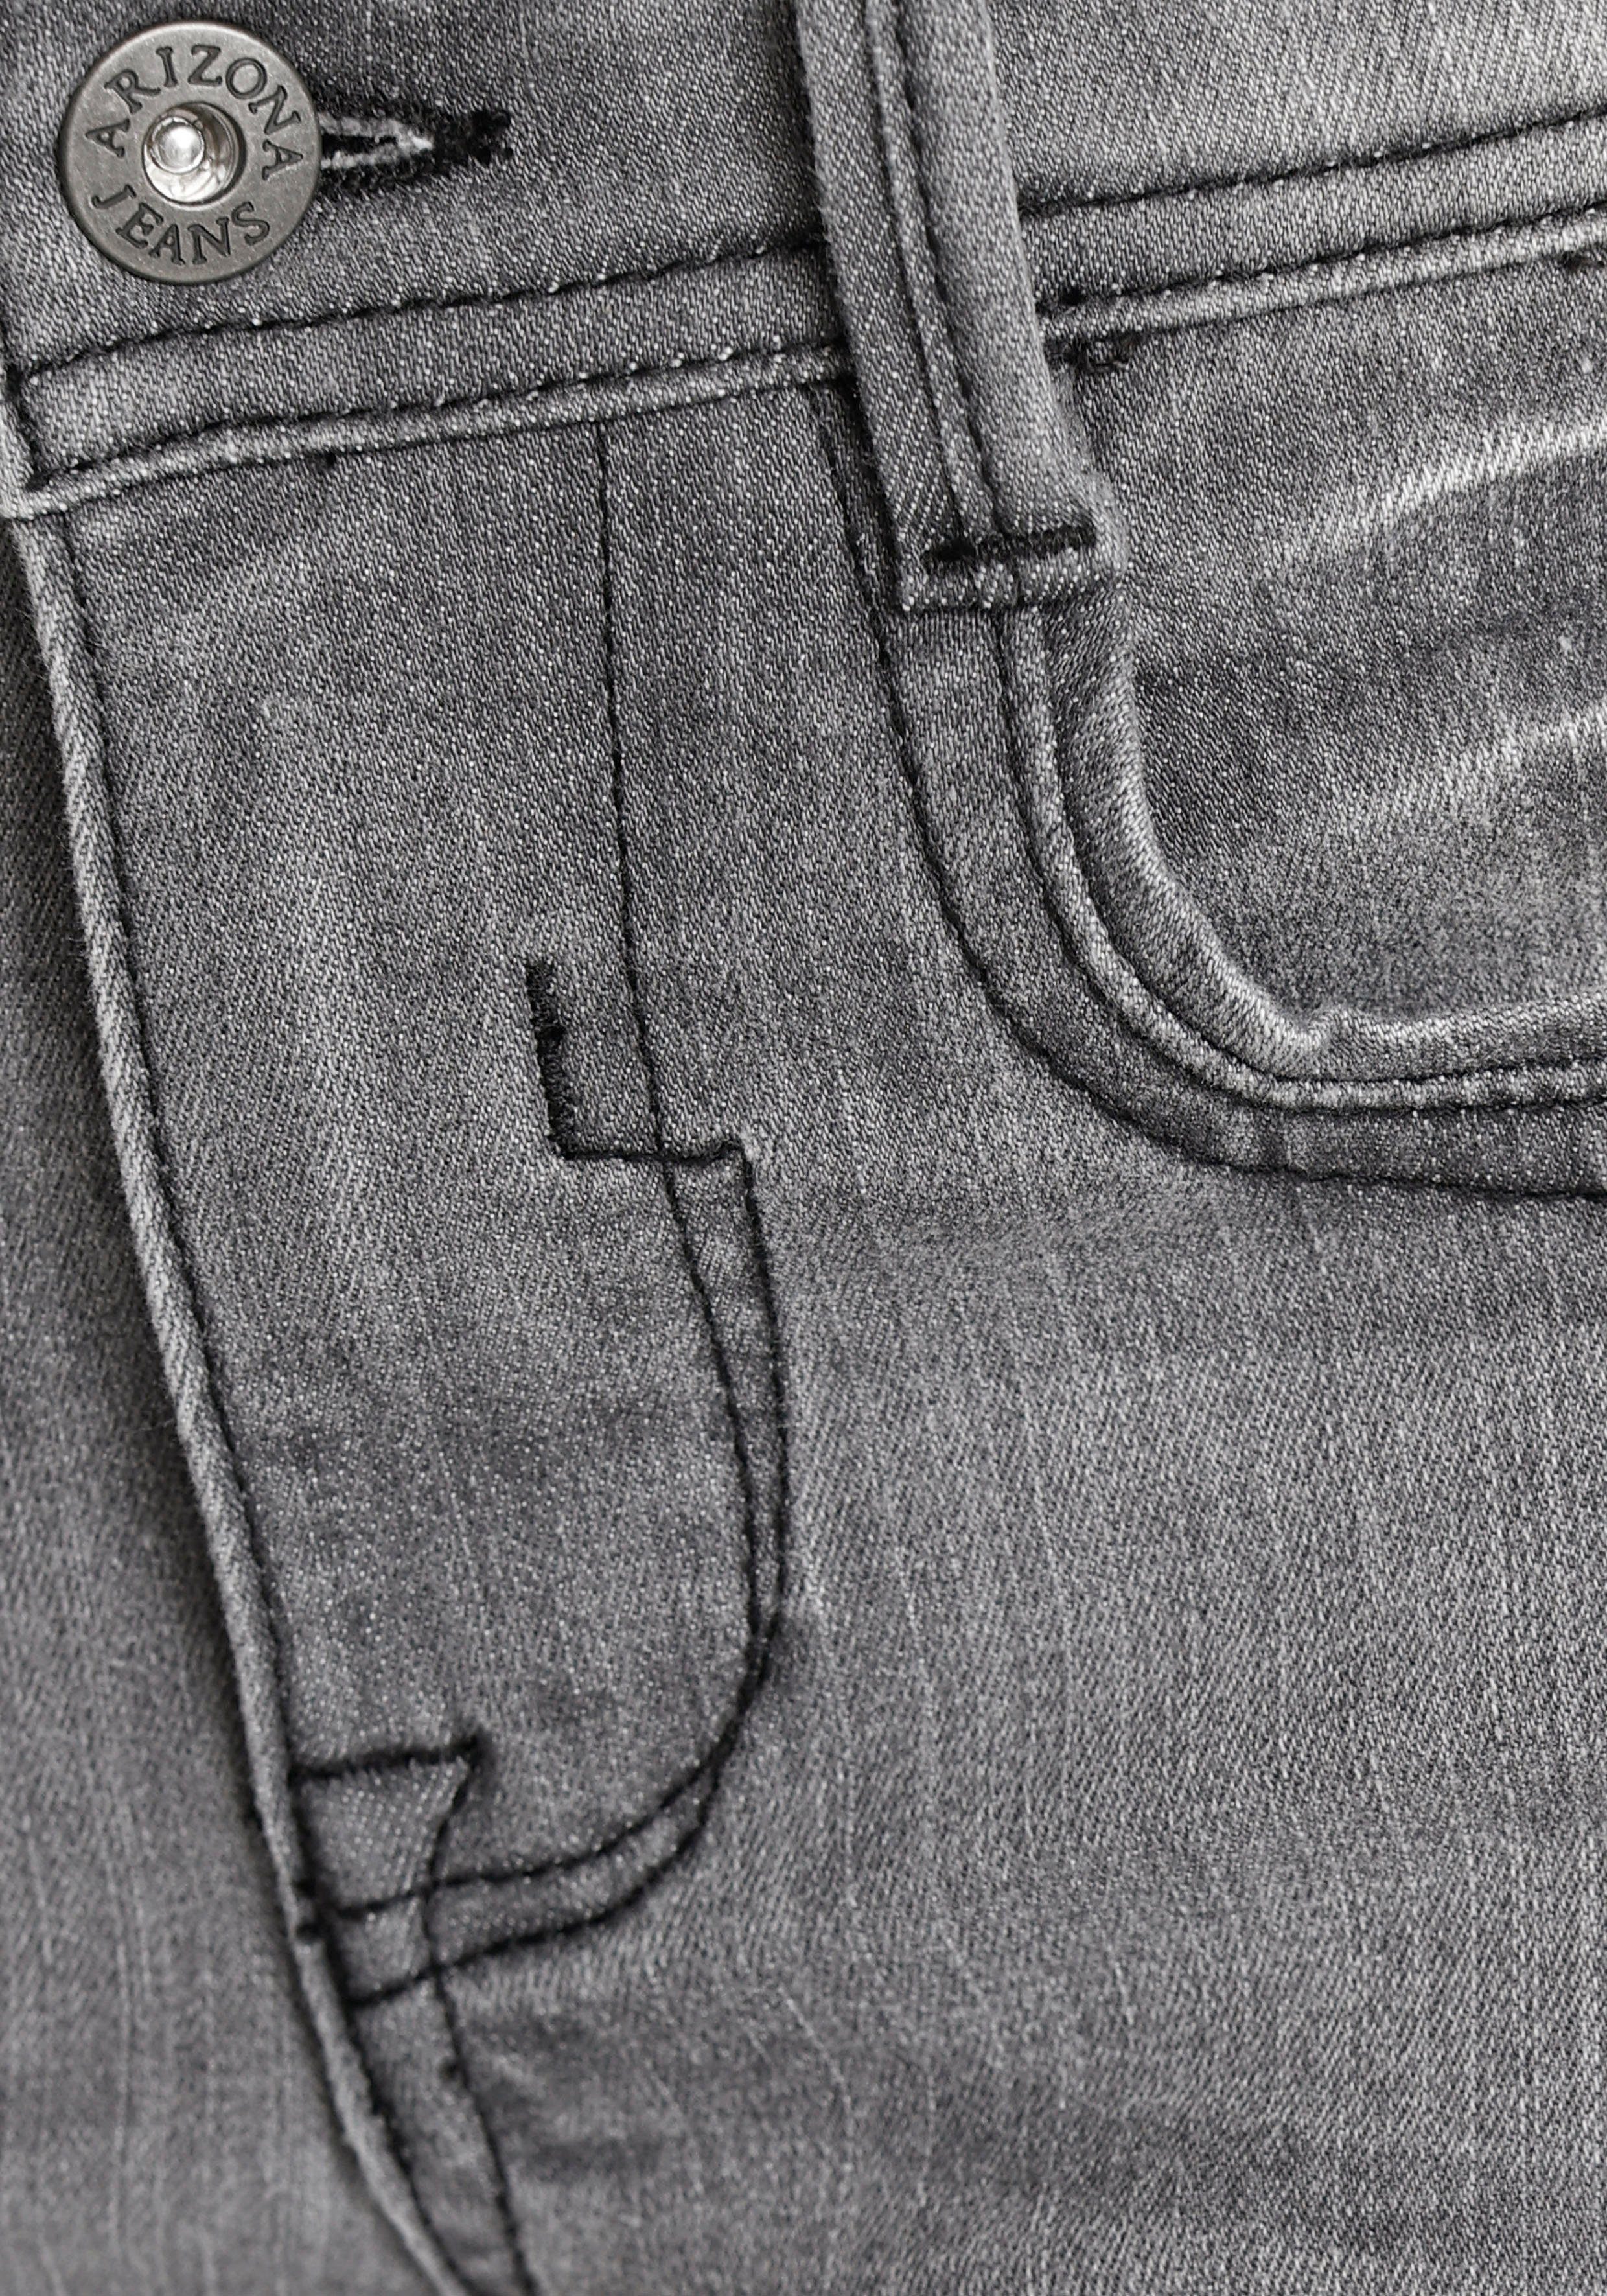 schmale Arizona Waschung Stretch-Jeans Form mit toller